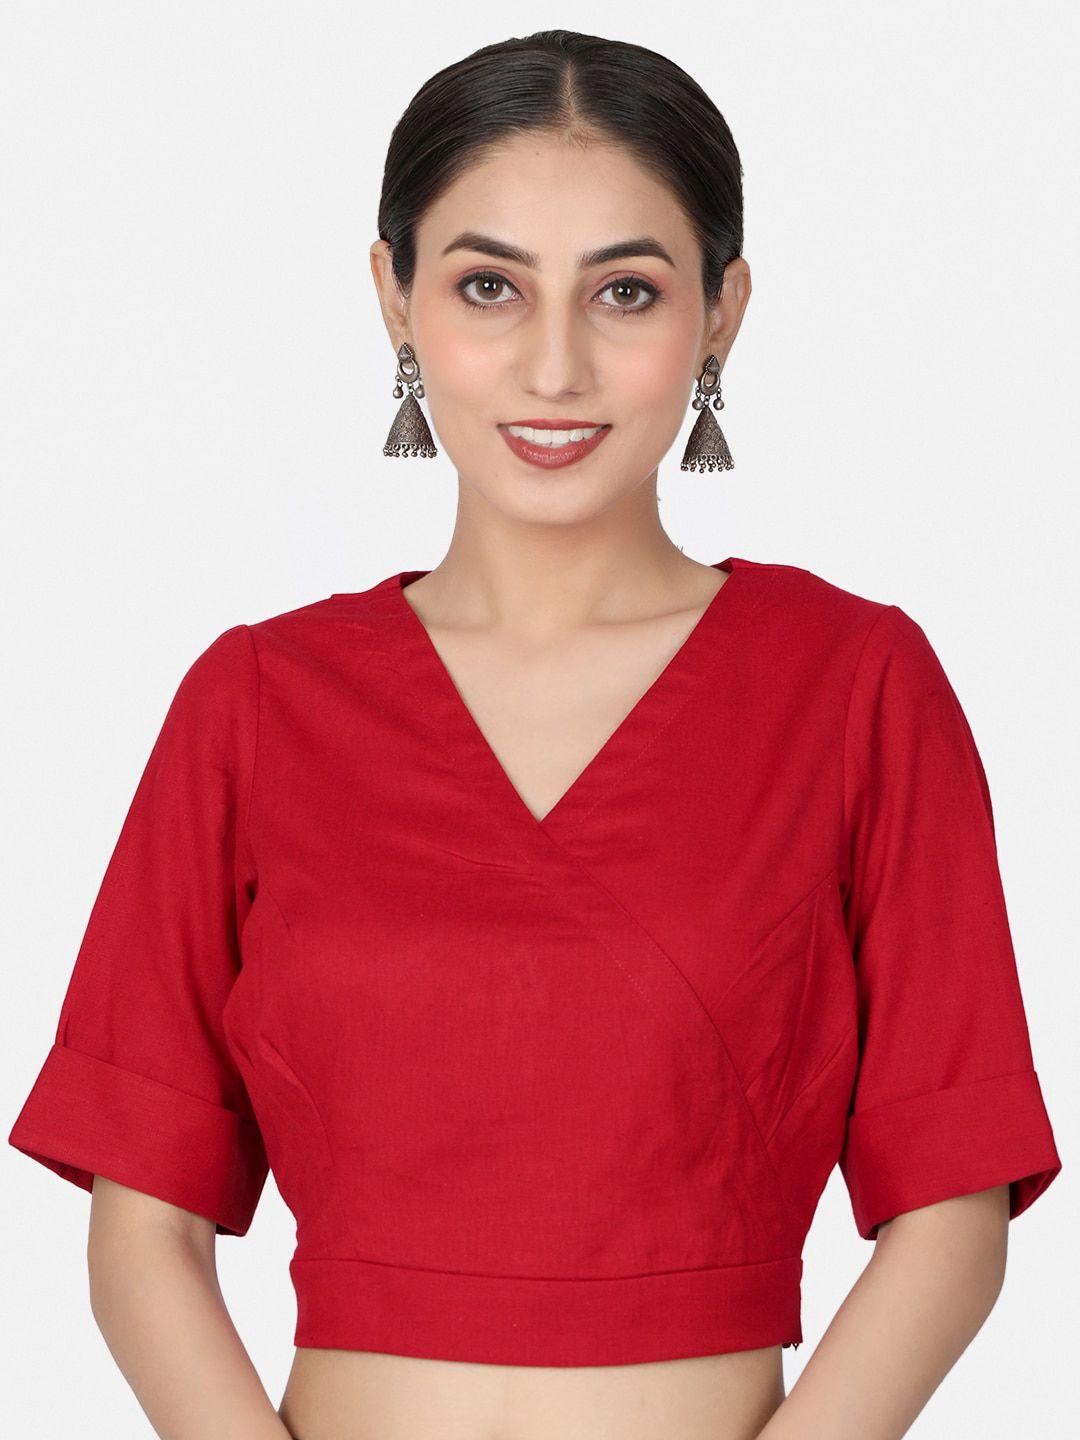 llajja-pure-cotton-readymade-saree-blouse